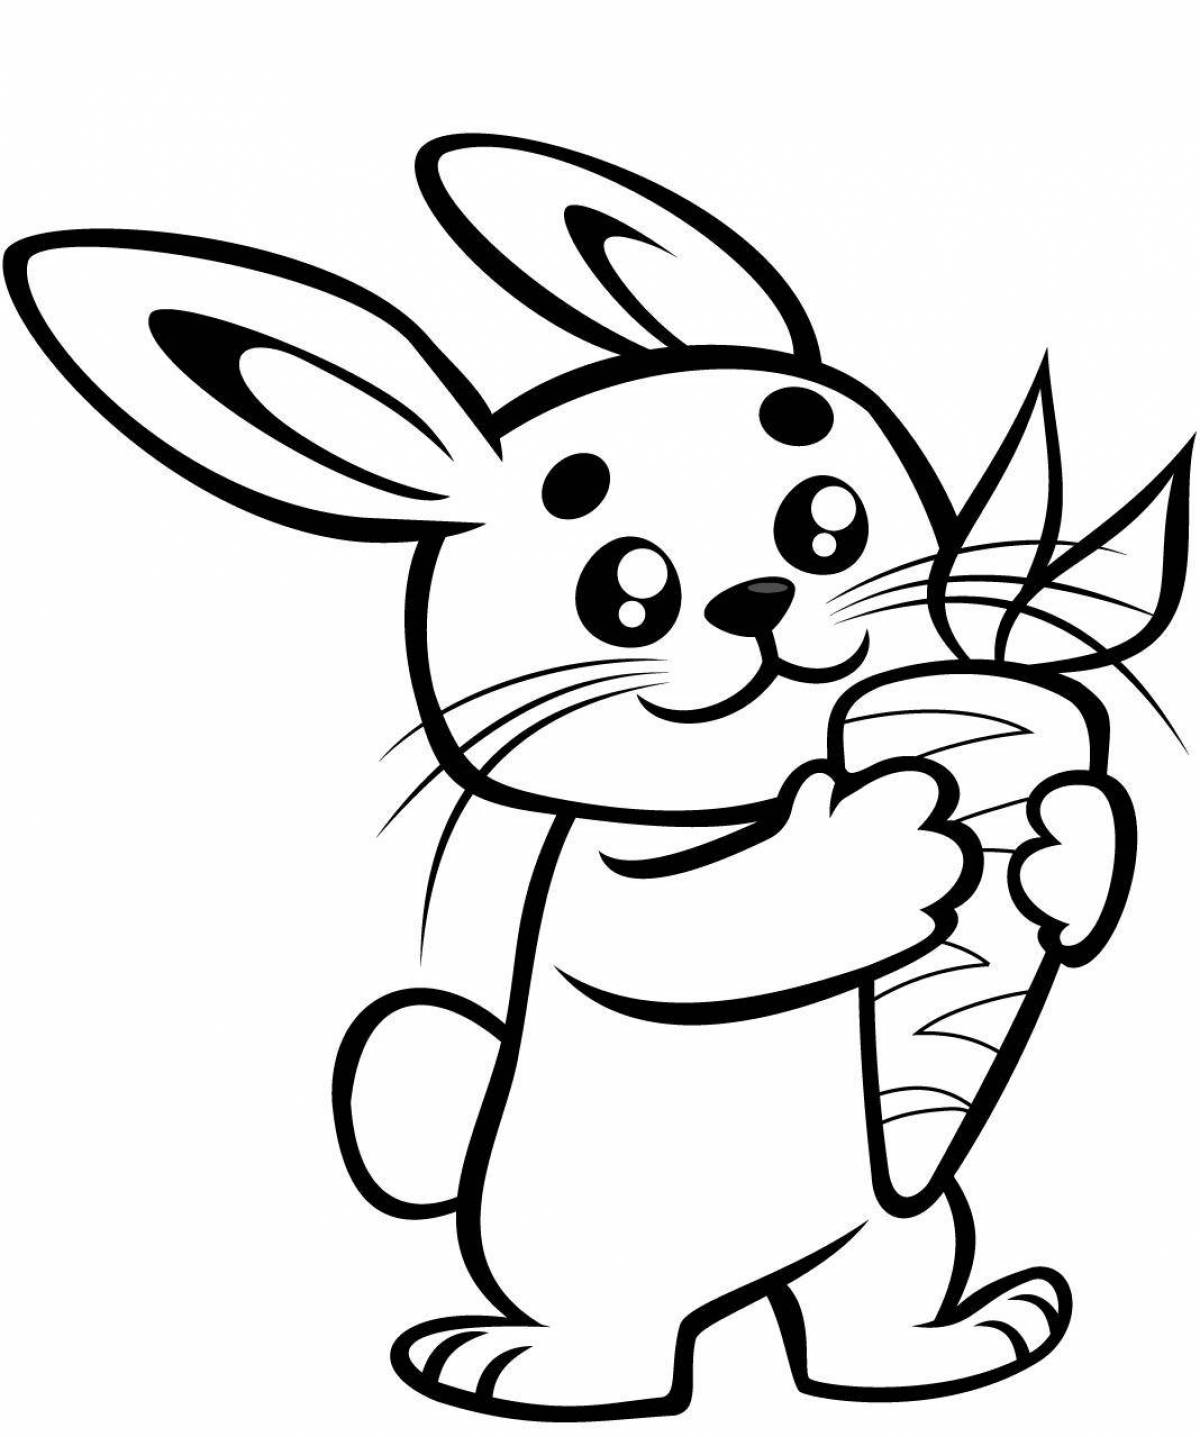 Carrot bunny for kids #6